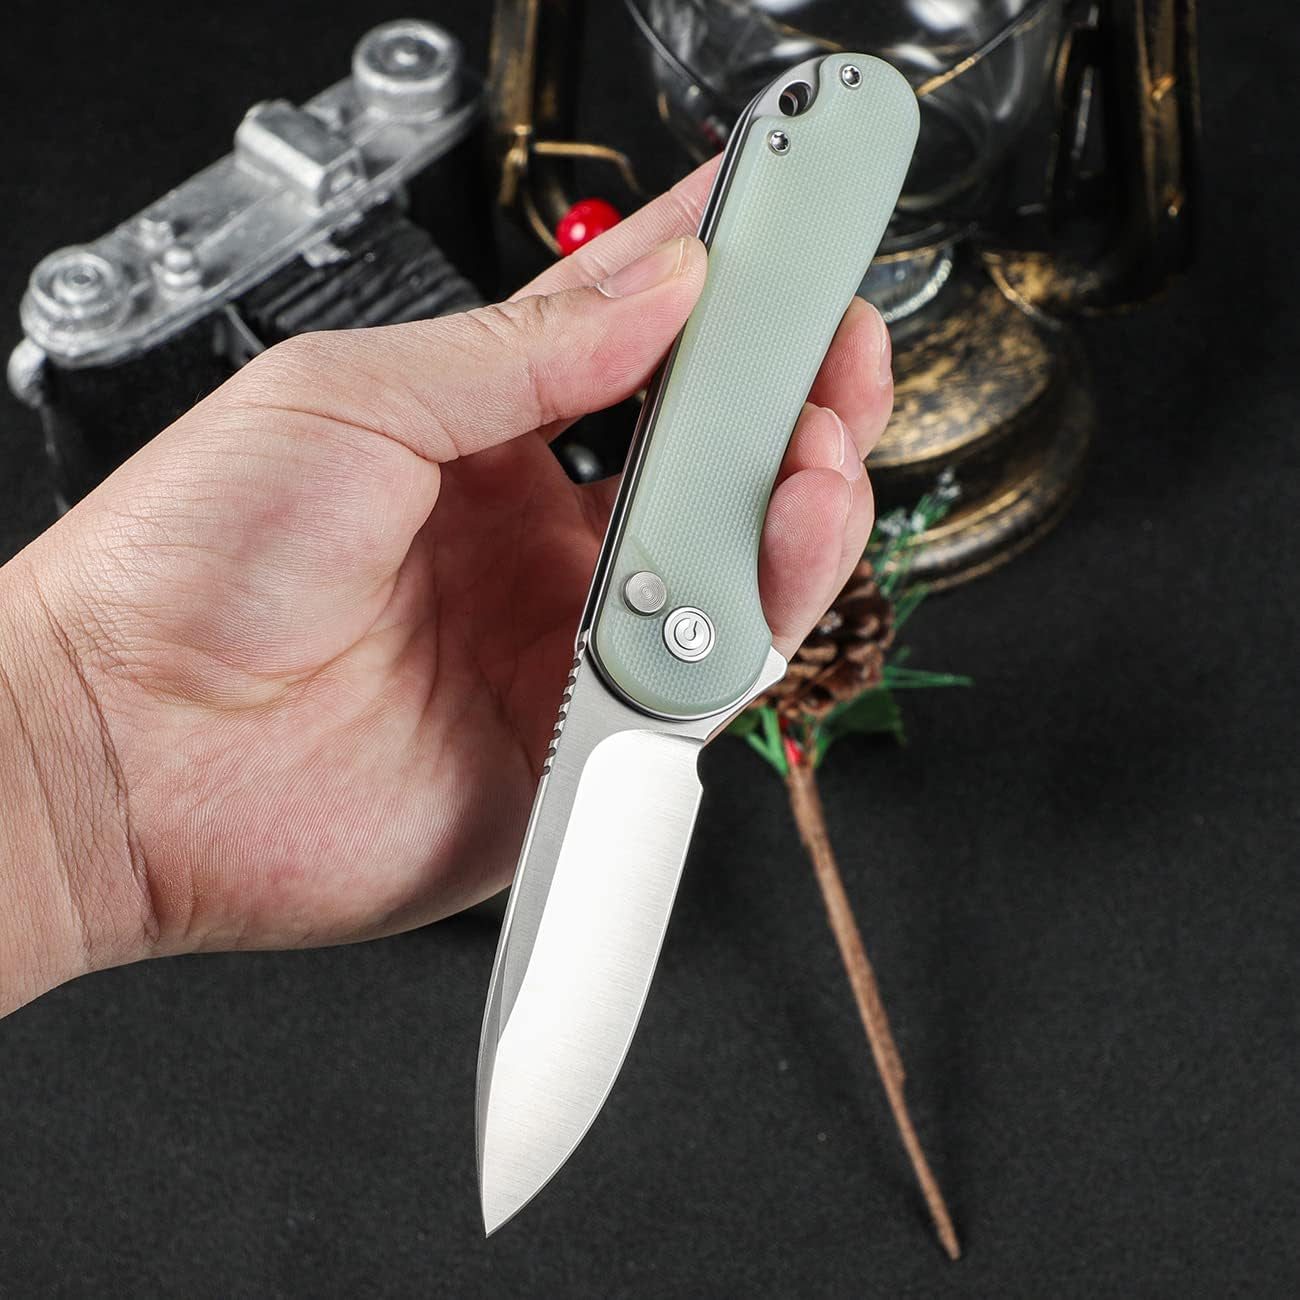 Elementum II Folding Pocketknife - 2.96" Nitro-V Steel Blade